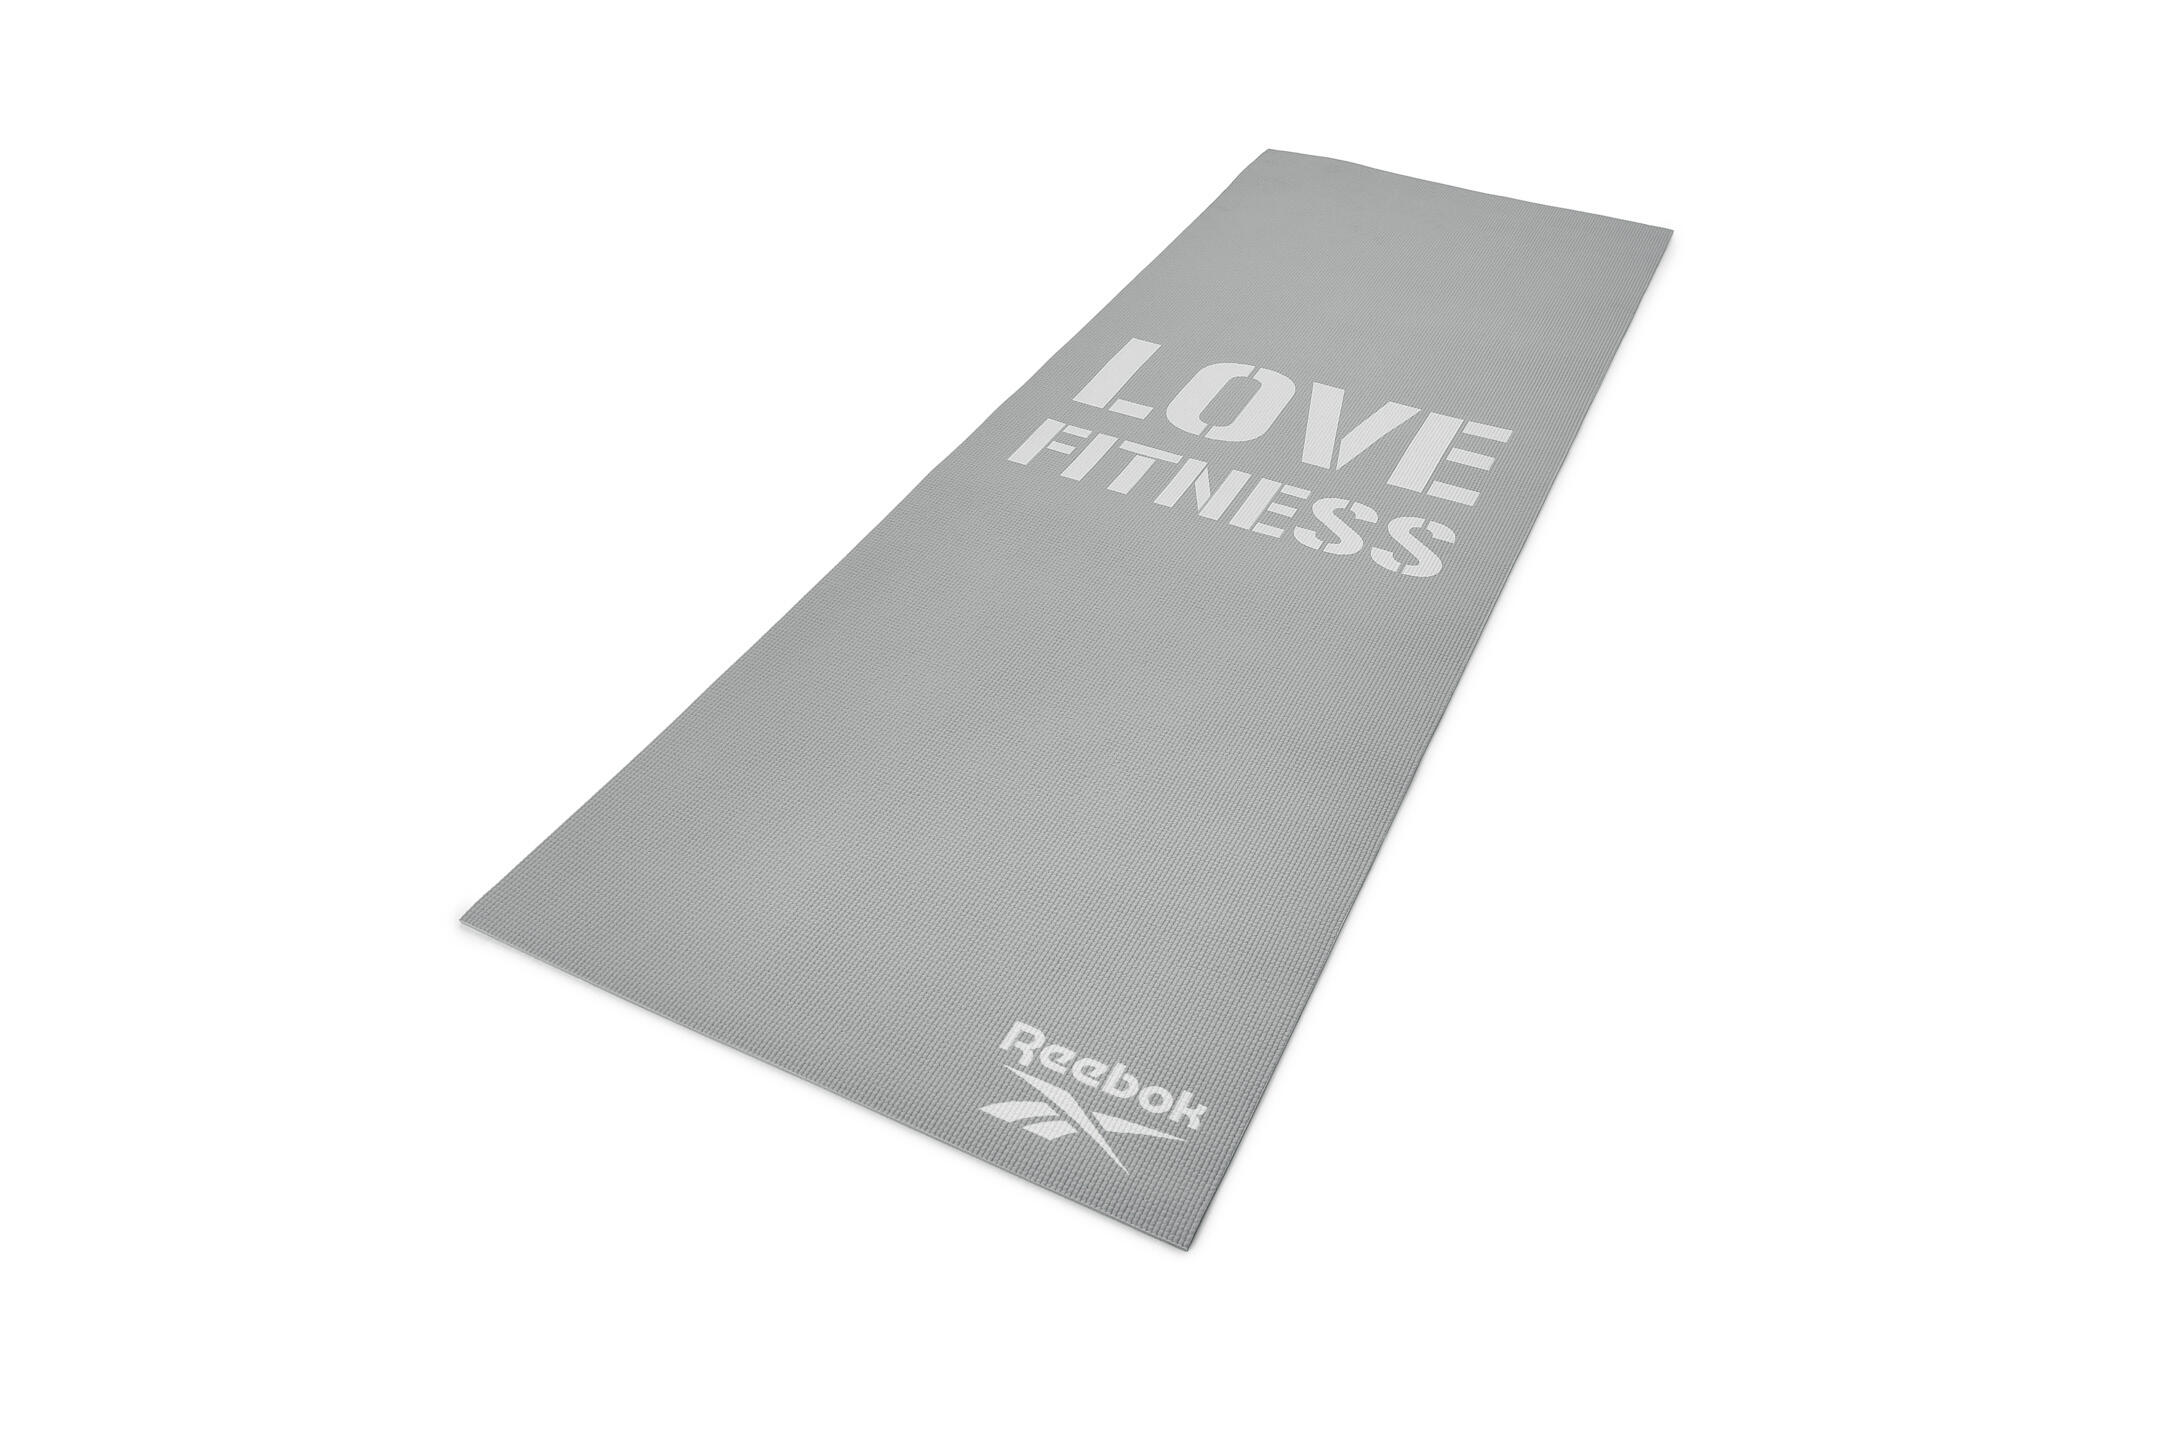 Reebok Love Fitness Mat - Grey 2/5